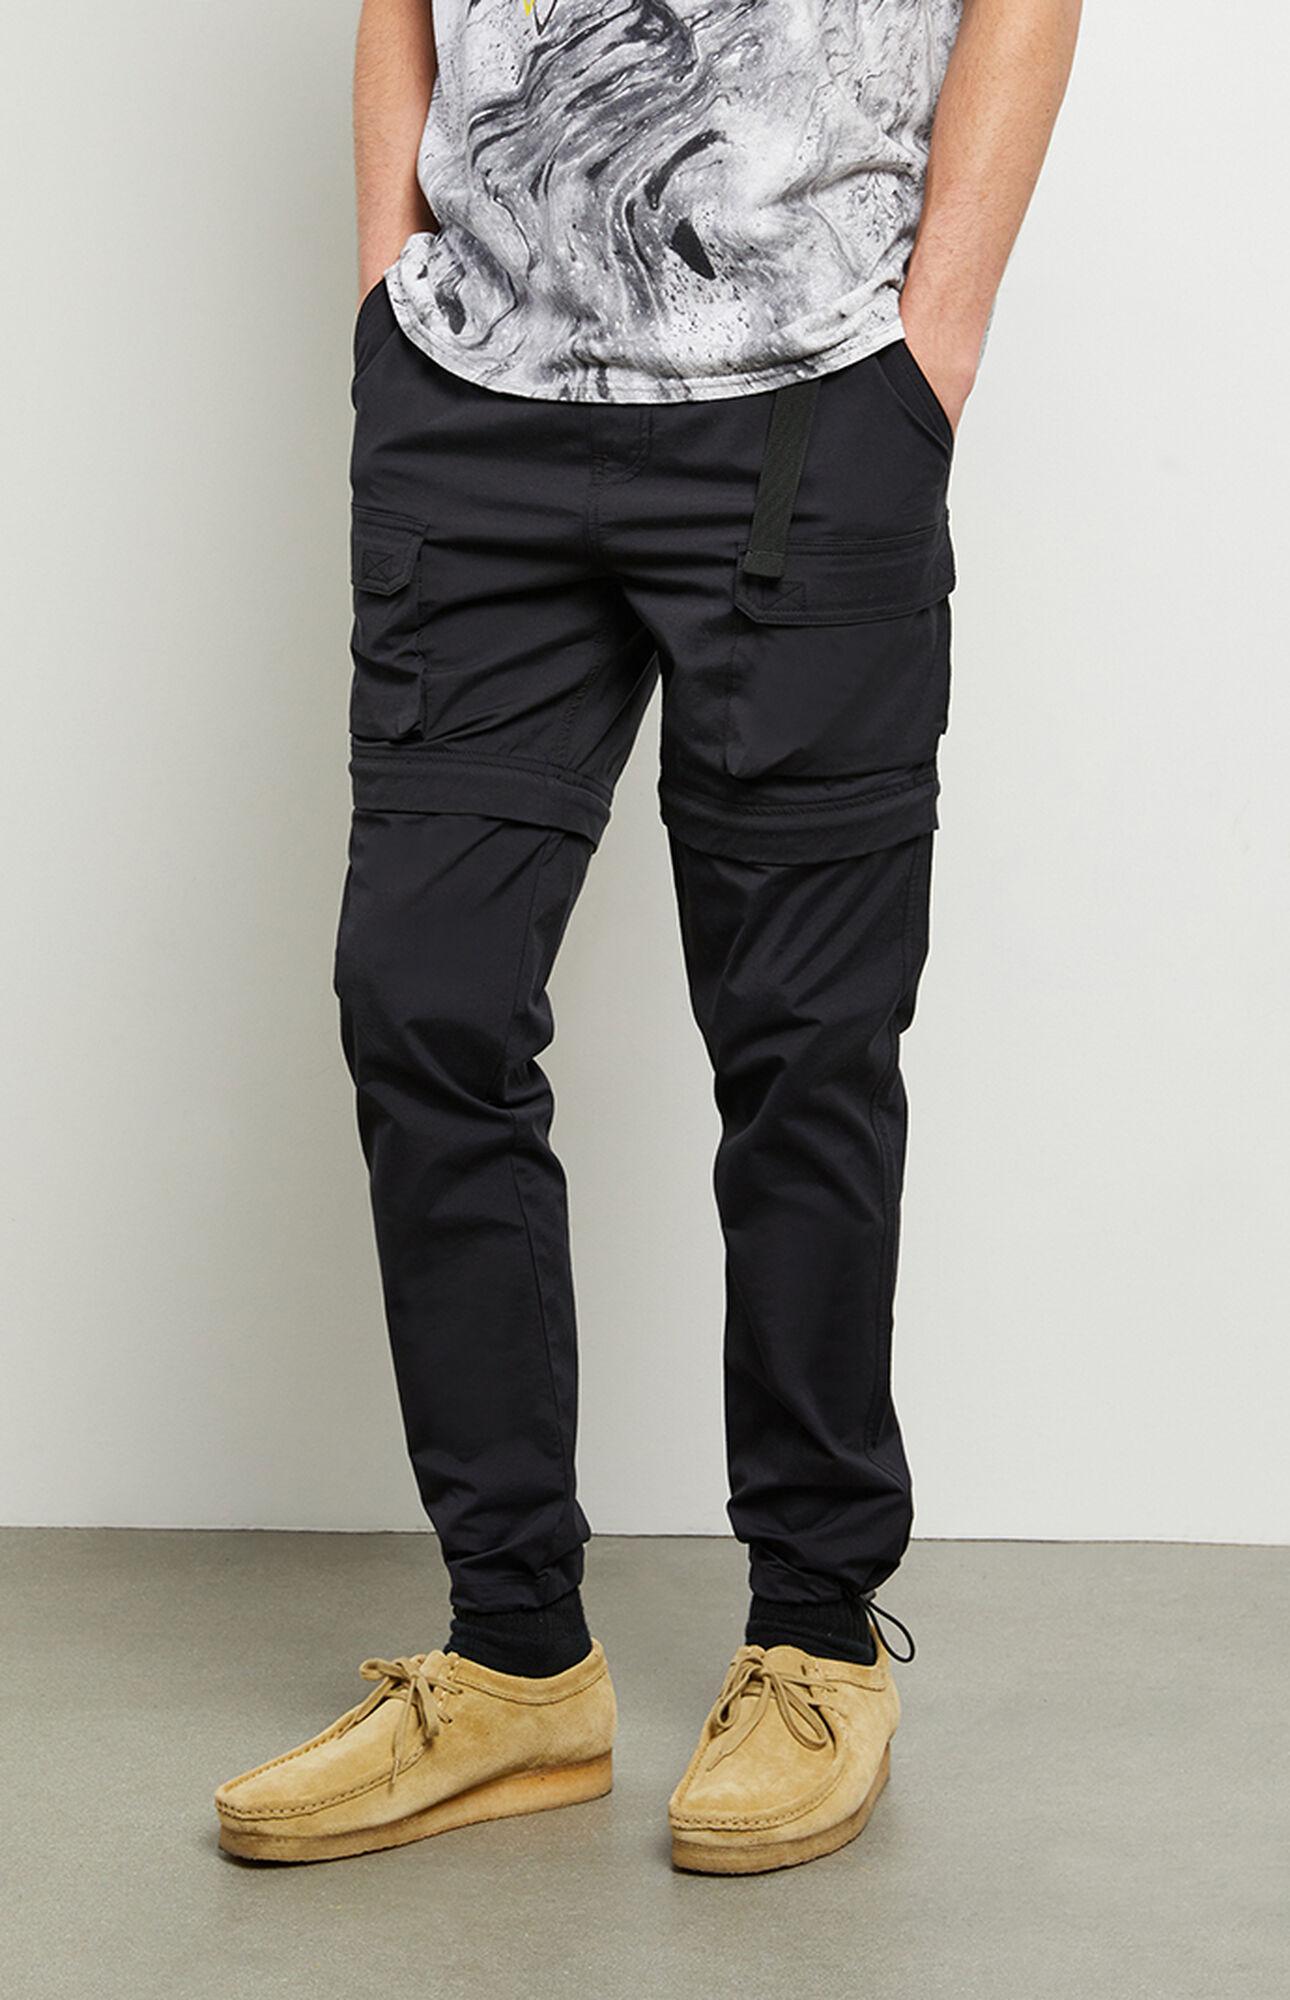 PacSun Black Zip-off Slim Cargo Pants for Men - Lyst